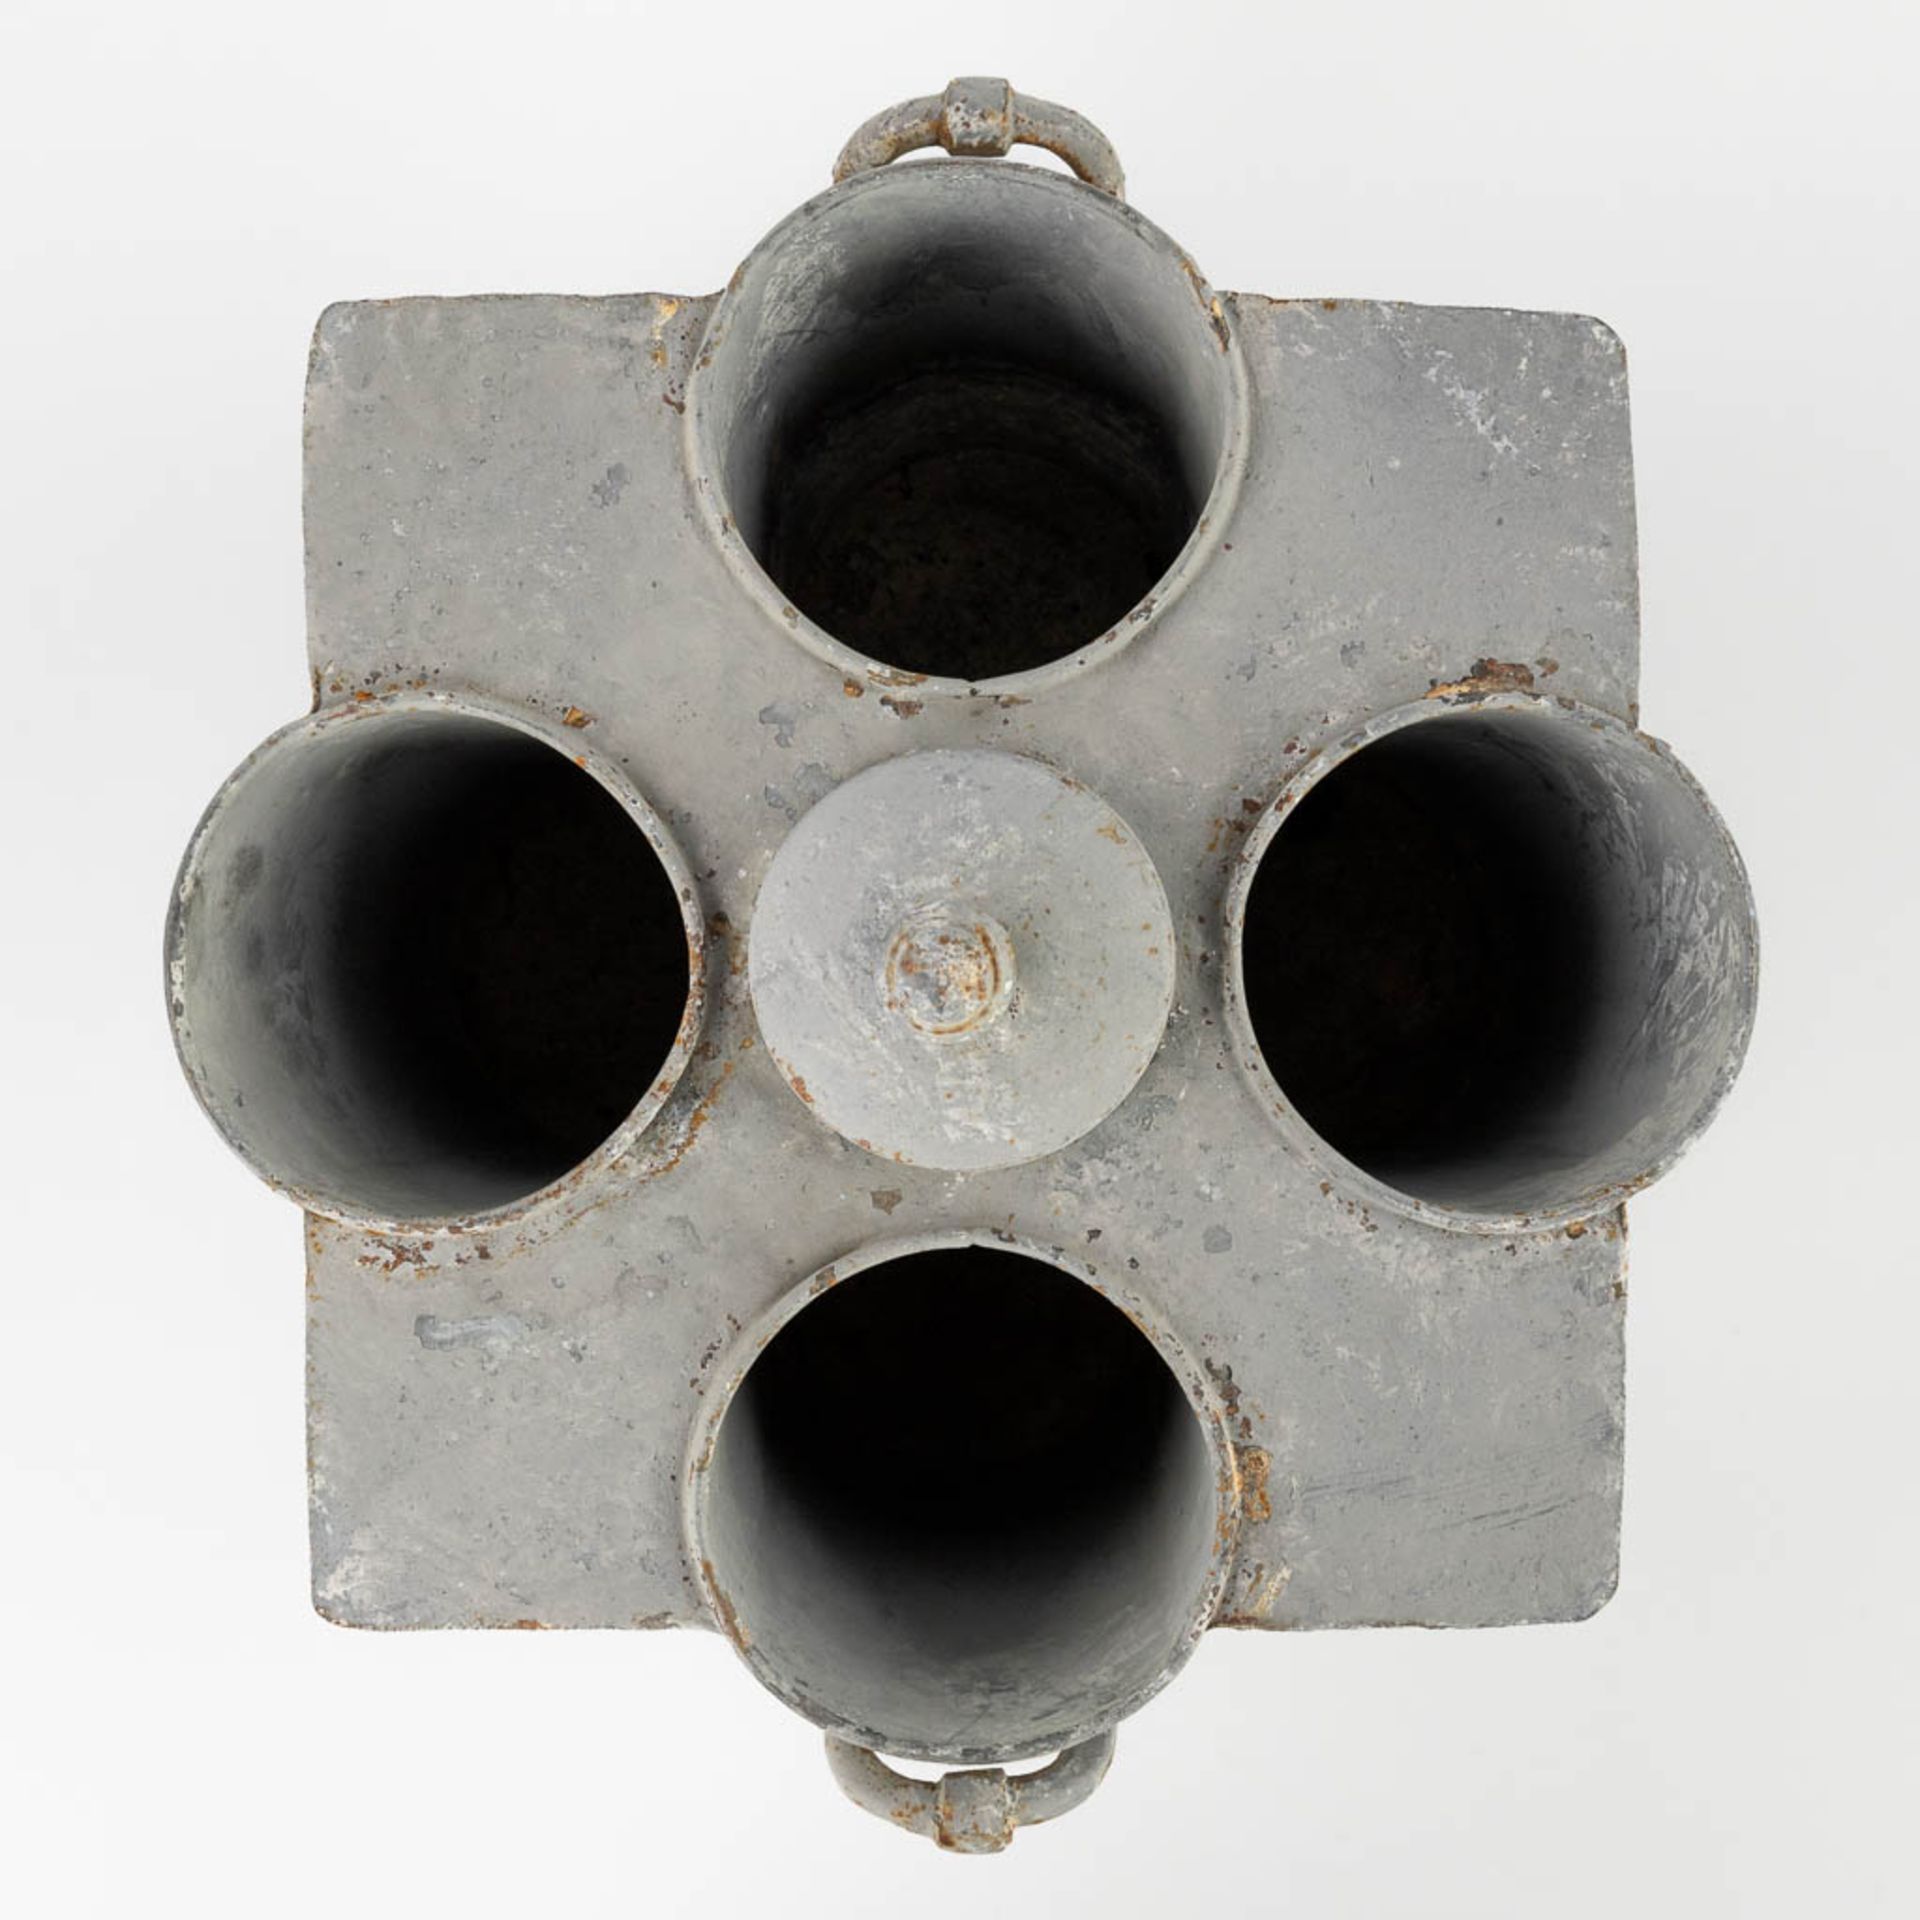 An antique wine cooler, made of zinc. (W:33 x H:25 x D:31 cm) - Image 7 of 13